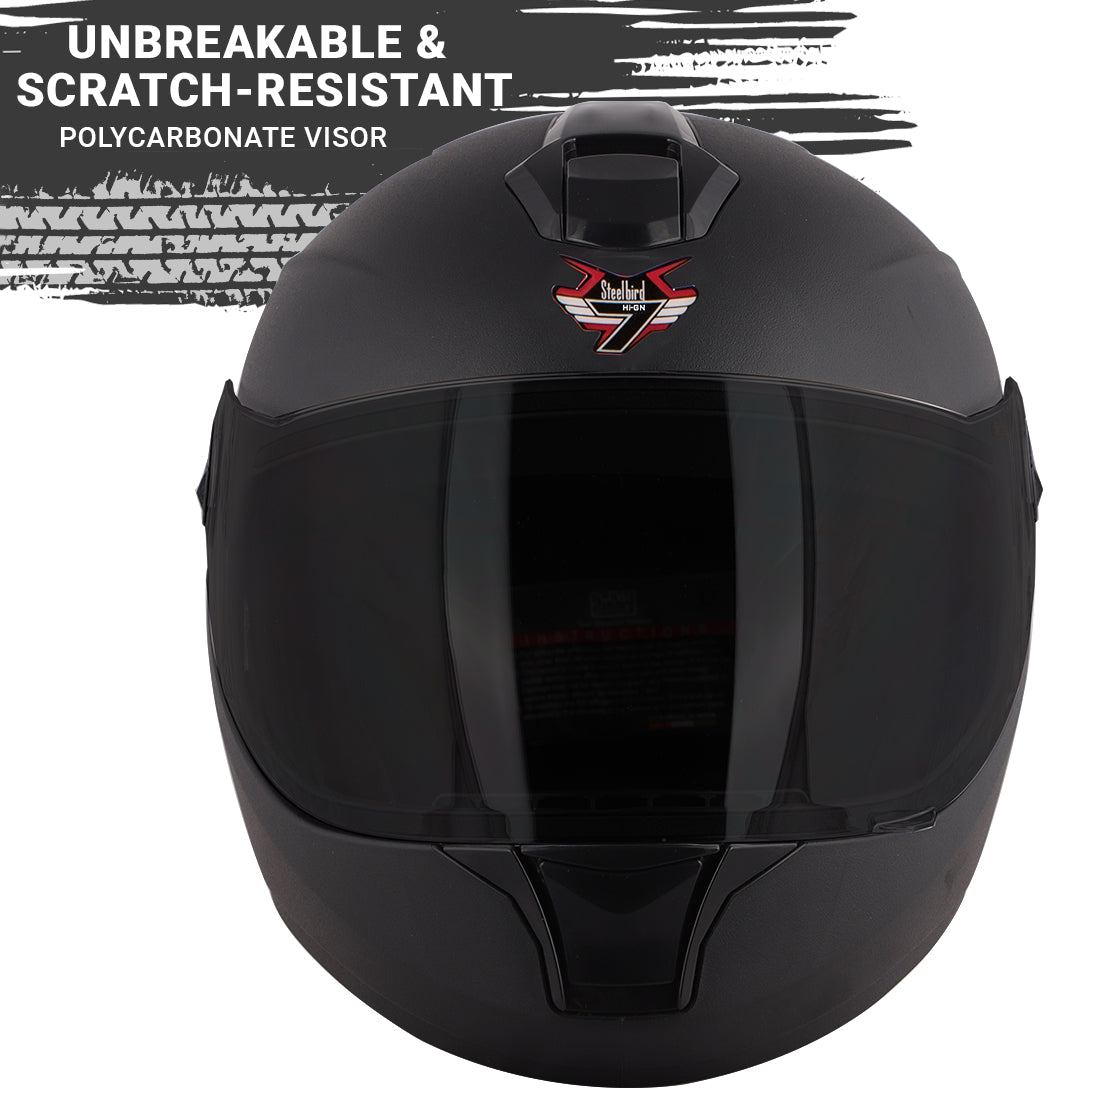 Steelbird SBH-11 7Wings ISI Certified Full Face Helmet for Men and Women (Dashing Black with Smoke Visor)